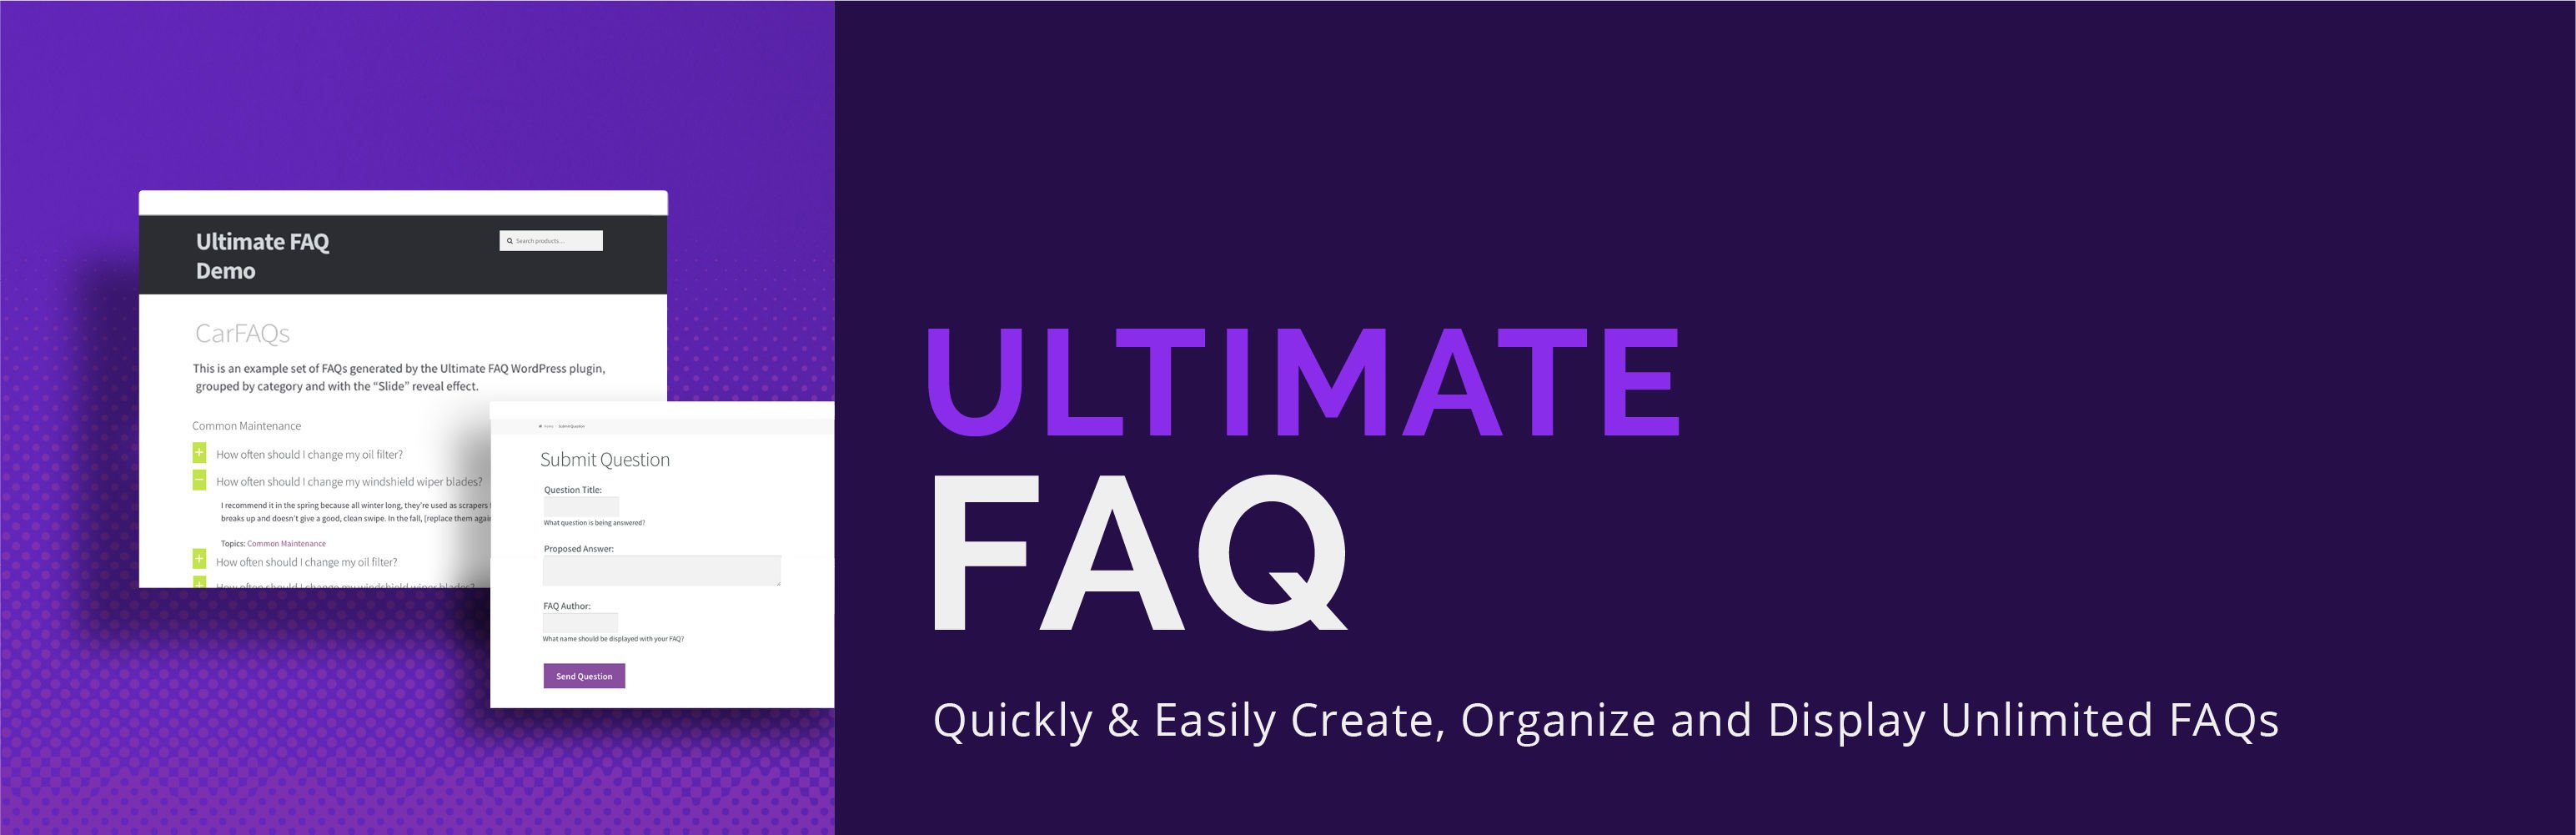 Ultimate FAQ - WordPress Plugin.jpg